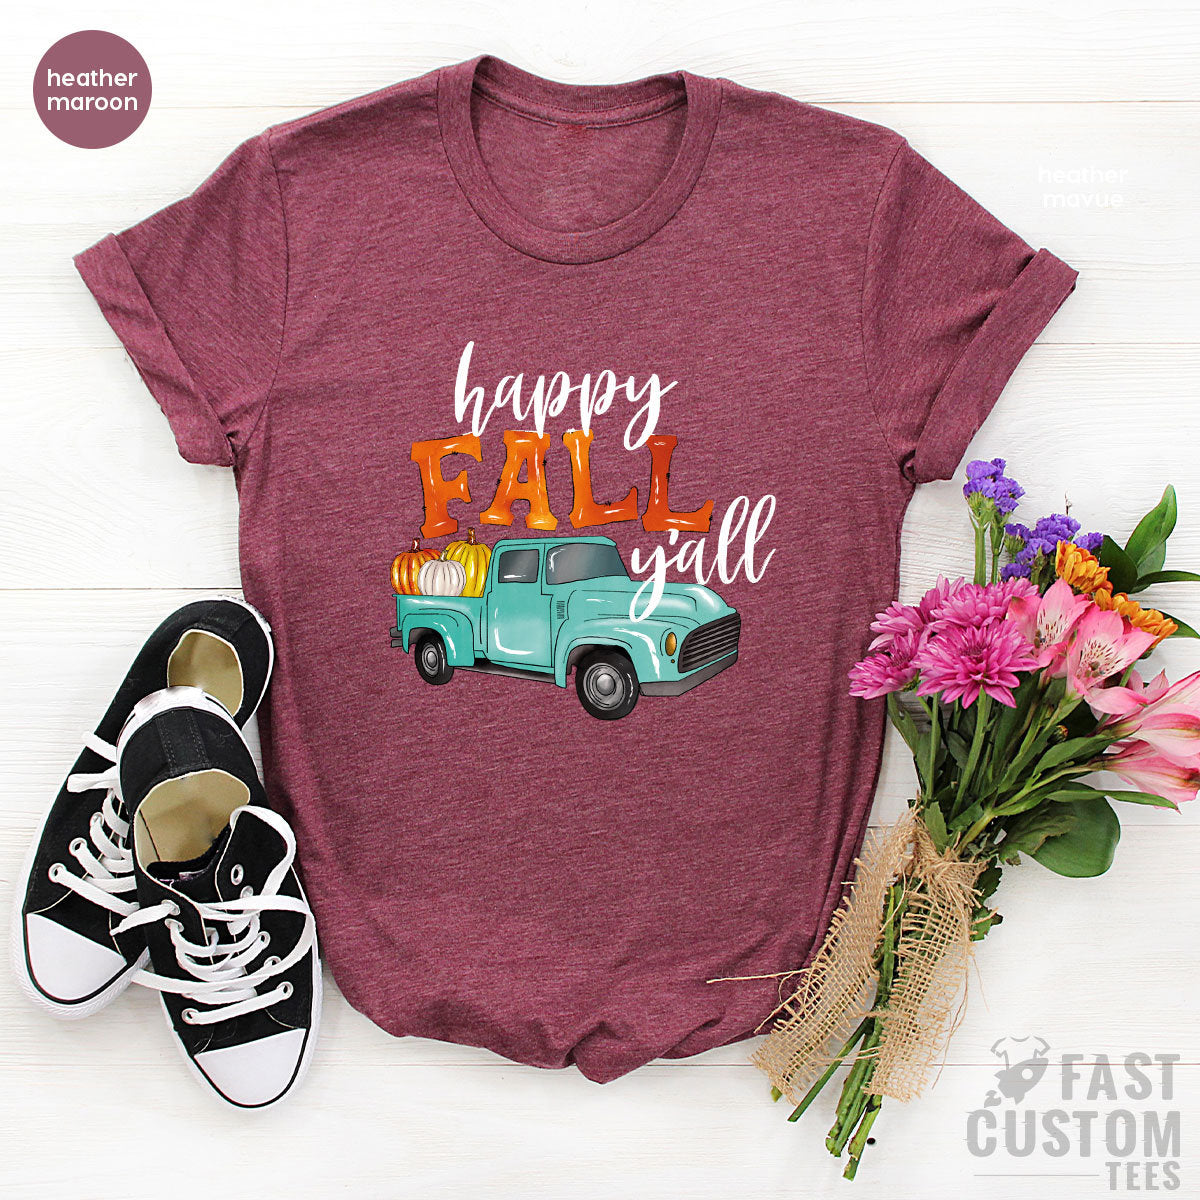 Happy Fall Yall Truck Shirt, Halloween Shirt, Fall Pumpkin Truck Shirt, Autumn Shirt, Pumpkin Tshirt, Thanksgiving Shirt, Thankful Shirts - Fastdeliverytees.com